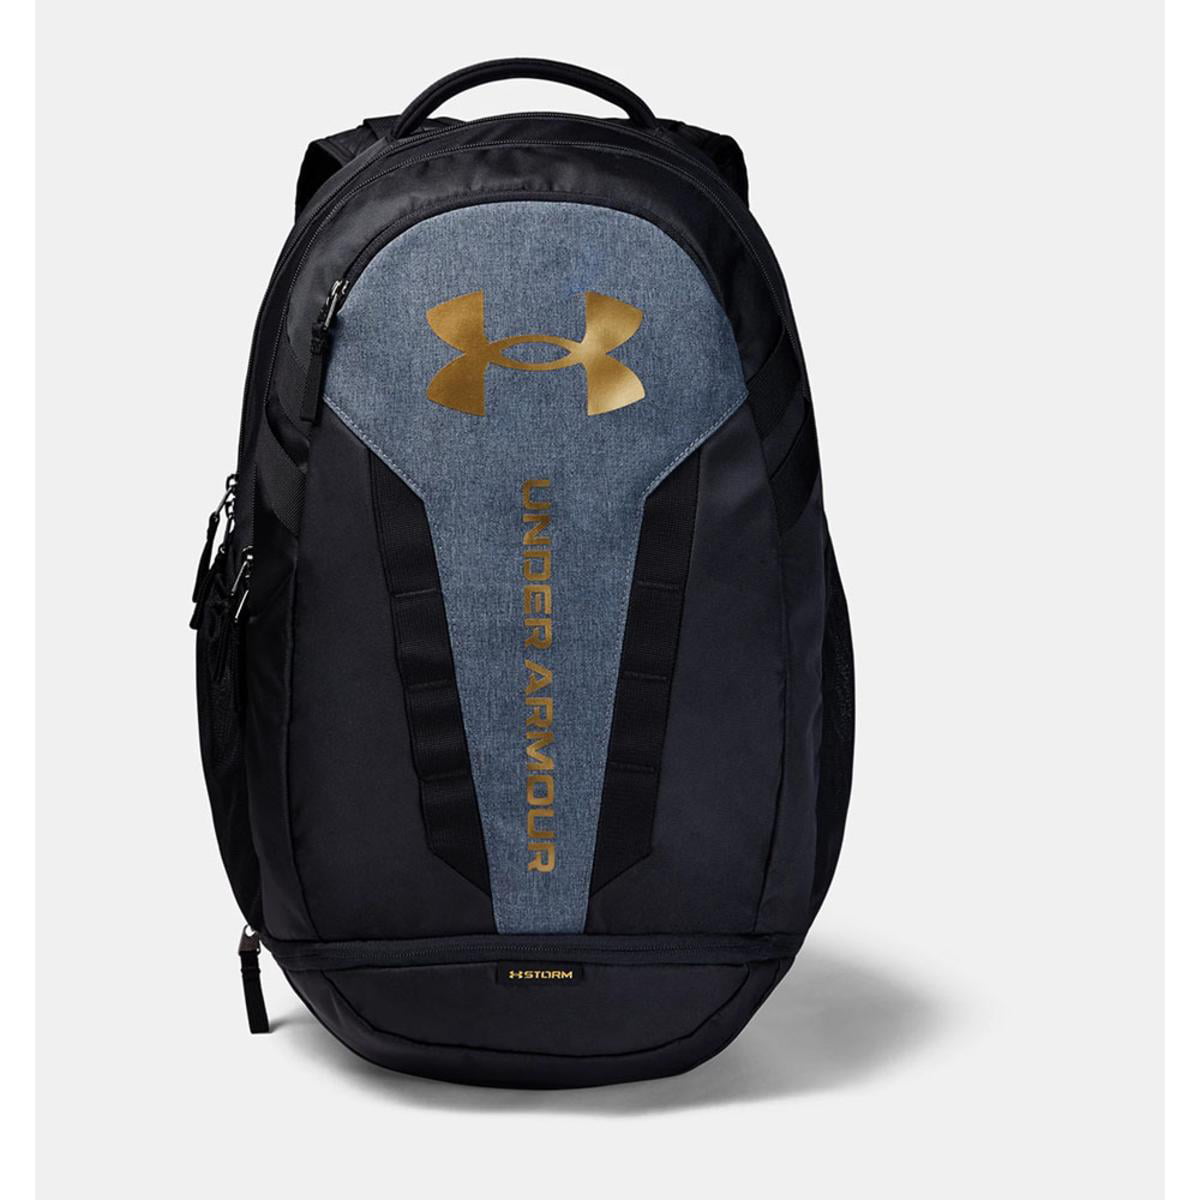 Under Armour UA Storm Adult Hustle 5.0 Backpack, Black and Gold 